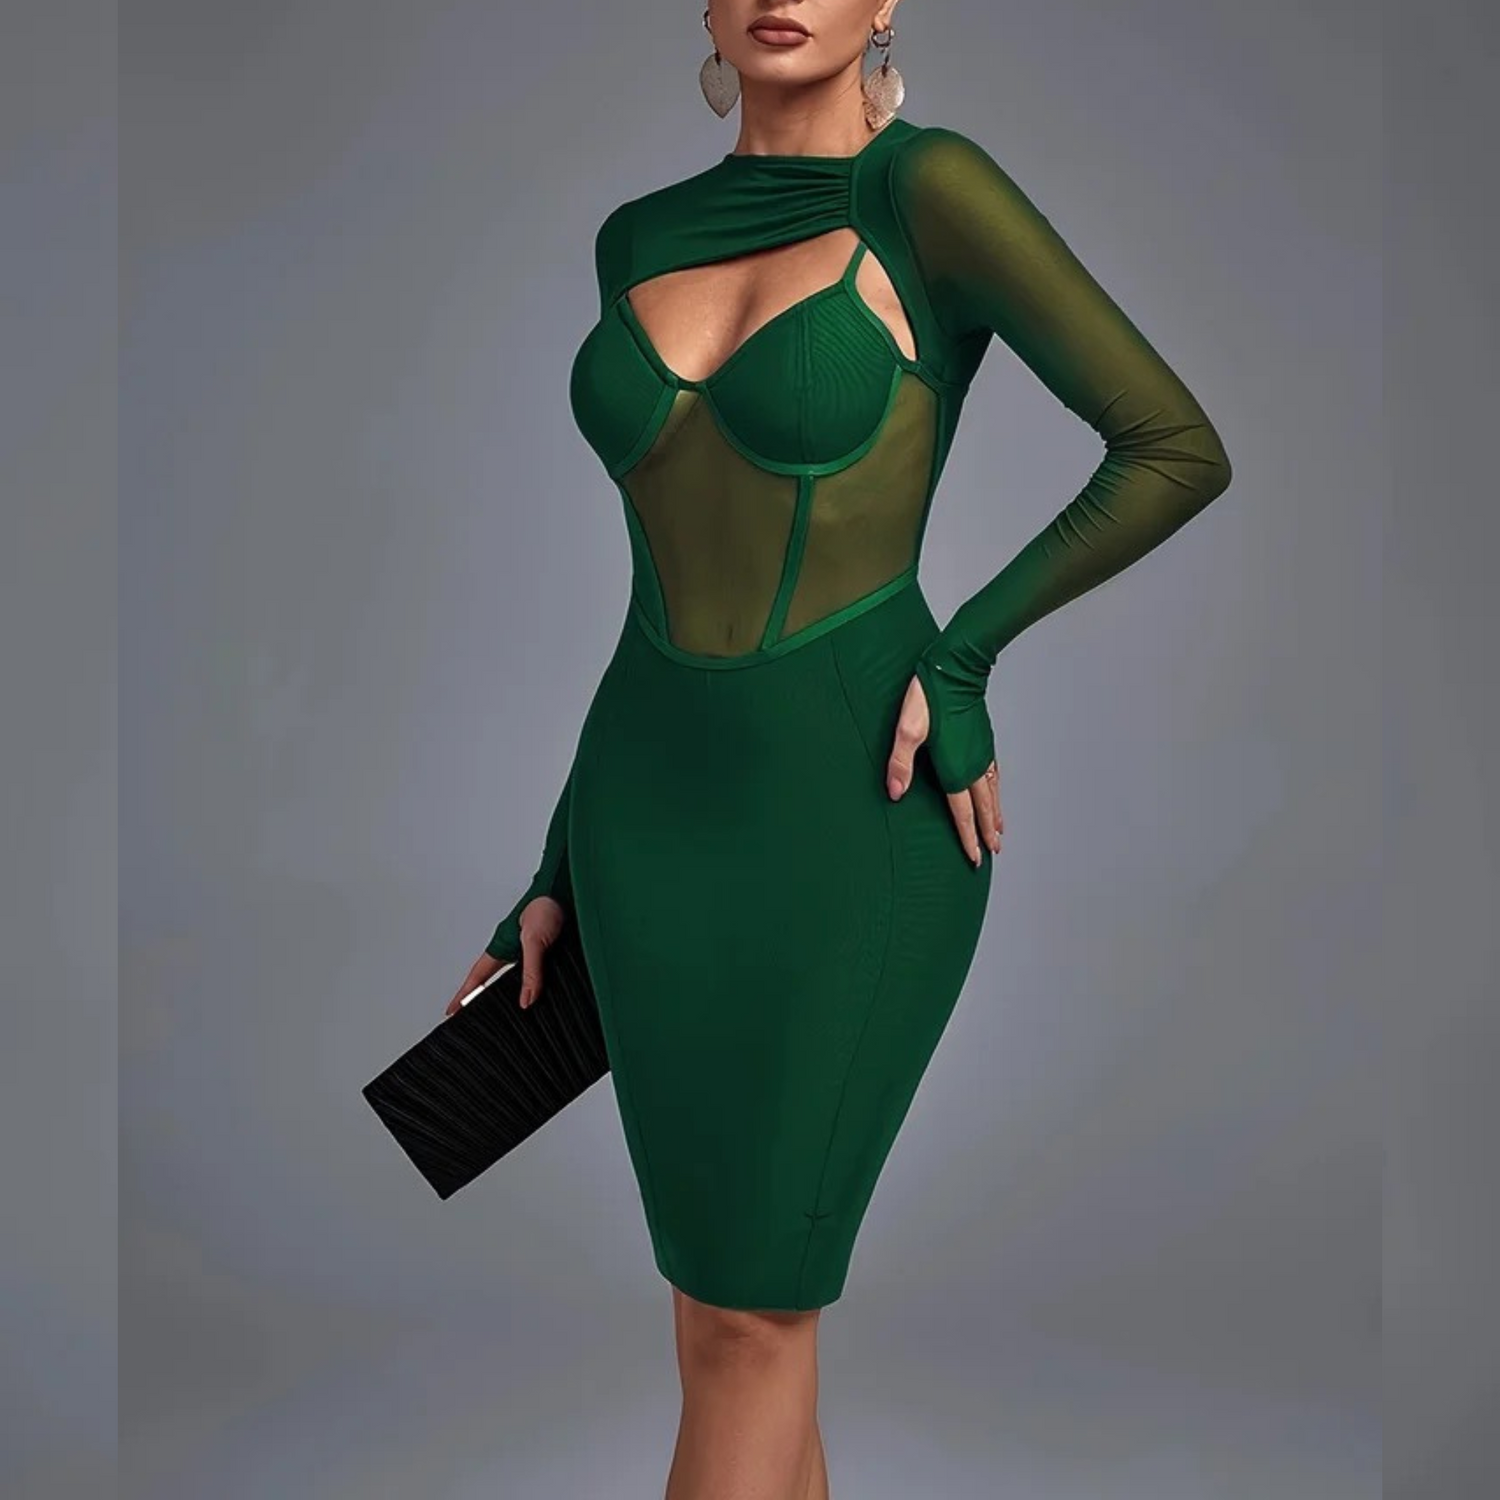 Amelia - Green Mesh and Bandage Dress - Model Mannequin